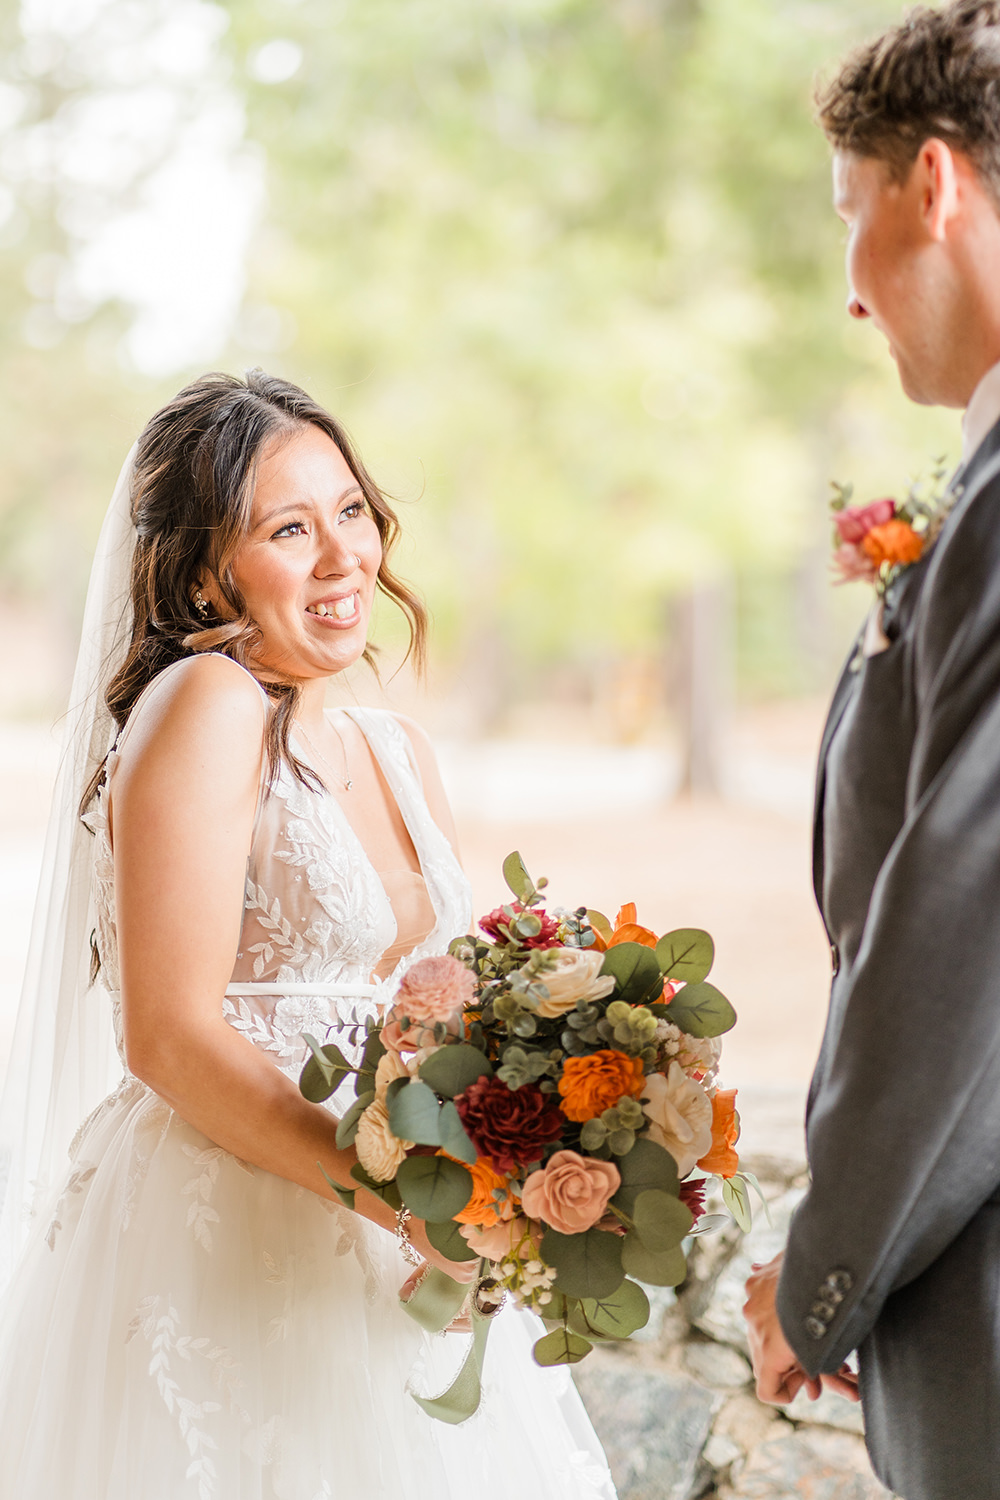 a bride and groom's wedding photos at a northstar house wedding in nevada city california